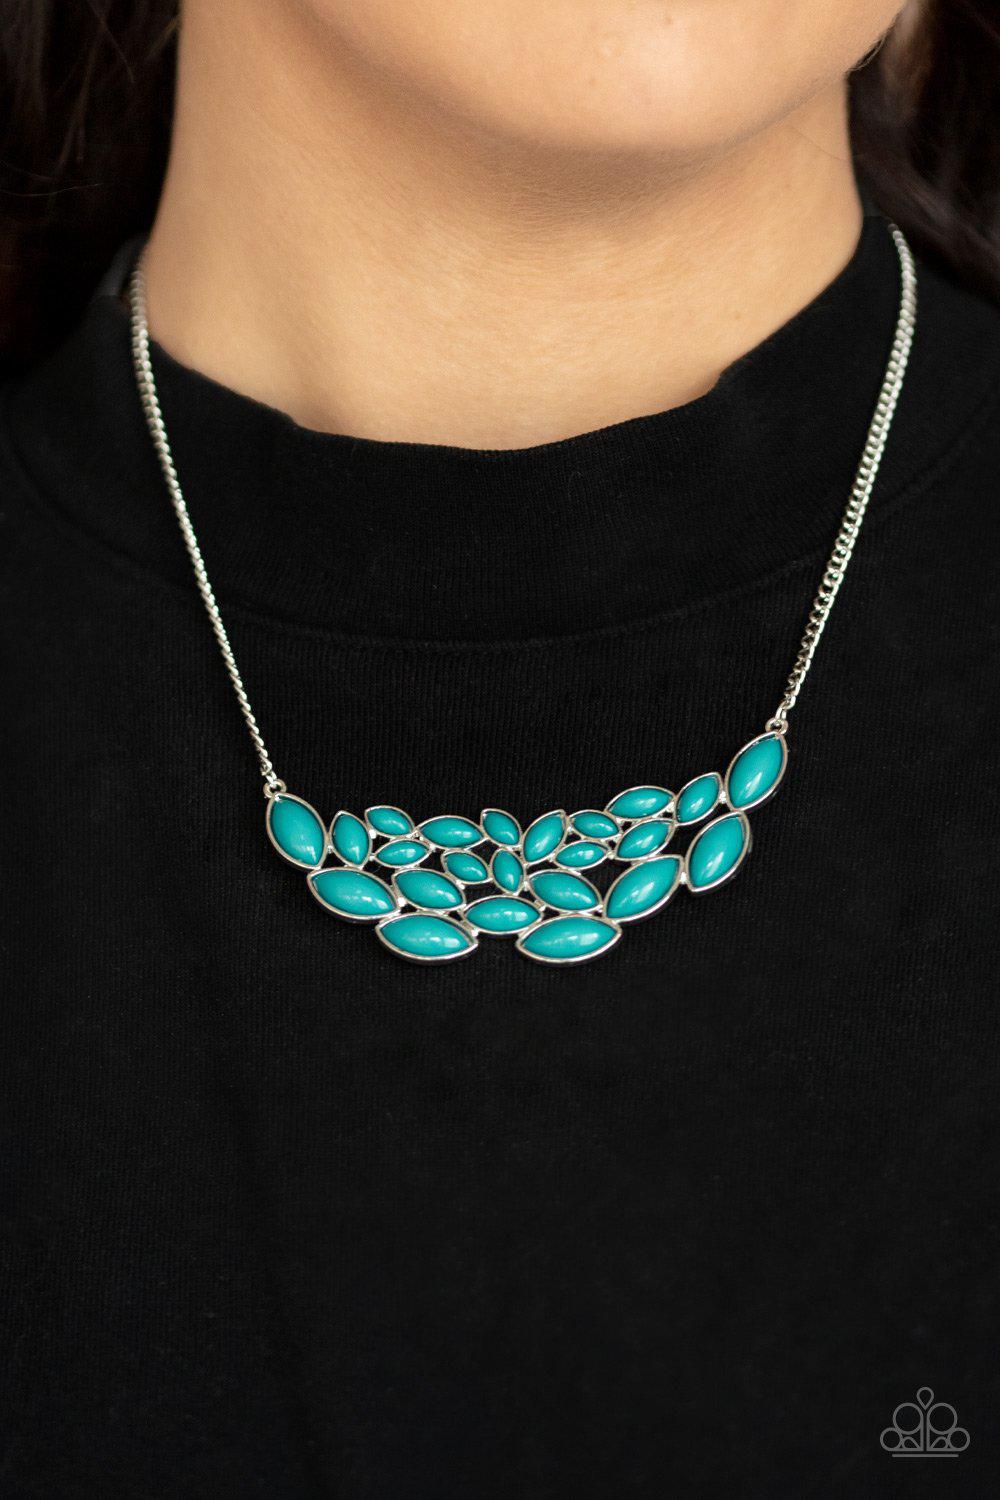 Eden Escape Blue Necklace - Paparazzi Accessories- lightbox - CarasShop.com - $5 Jewelry by Cara Jewels